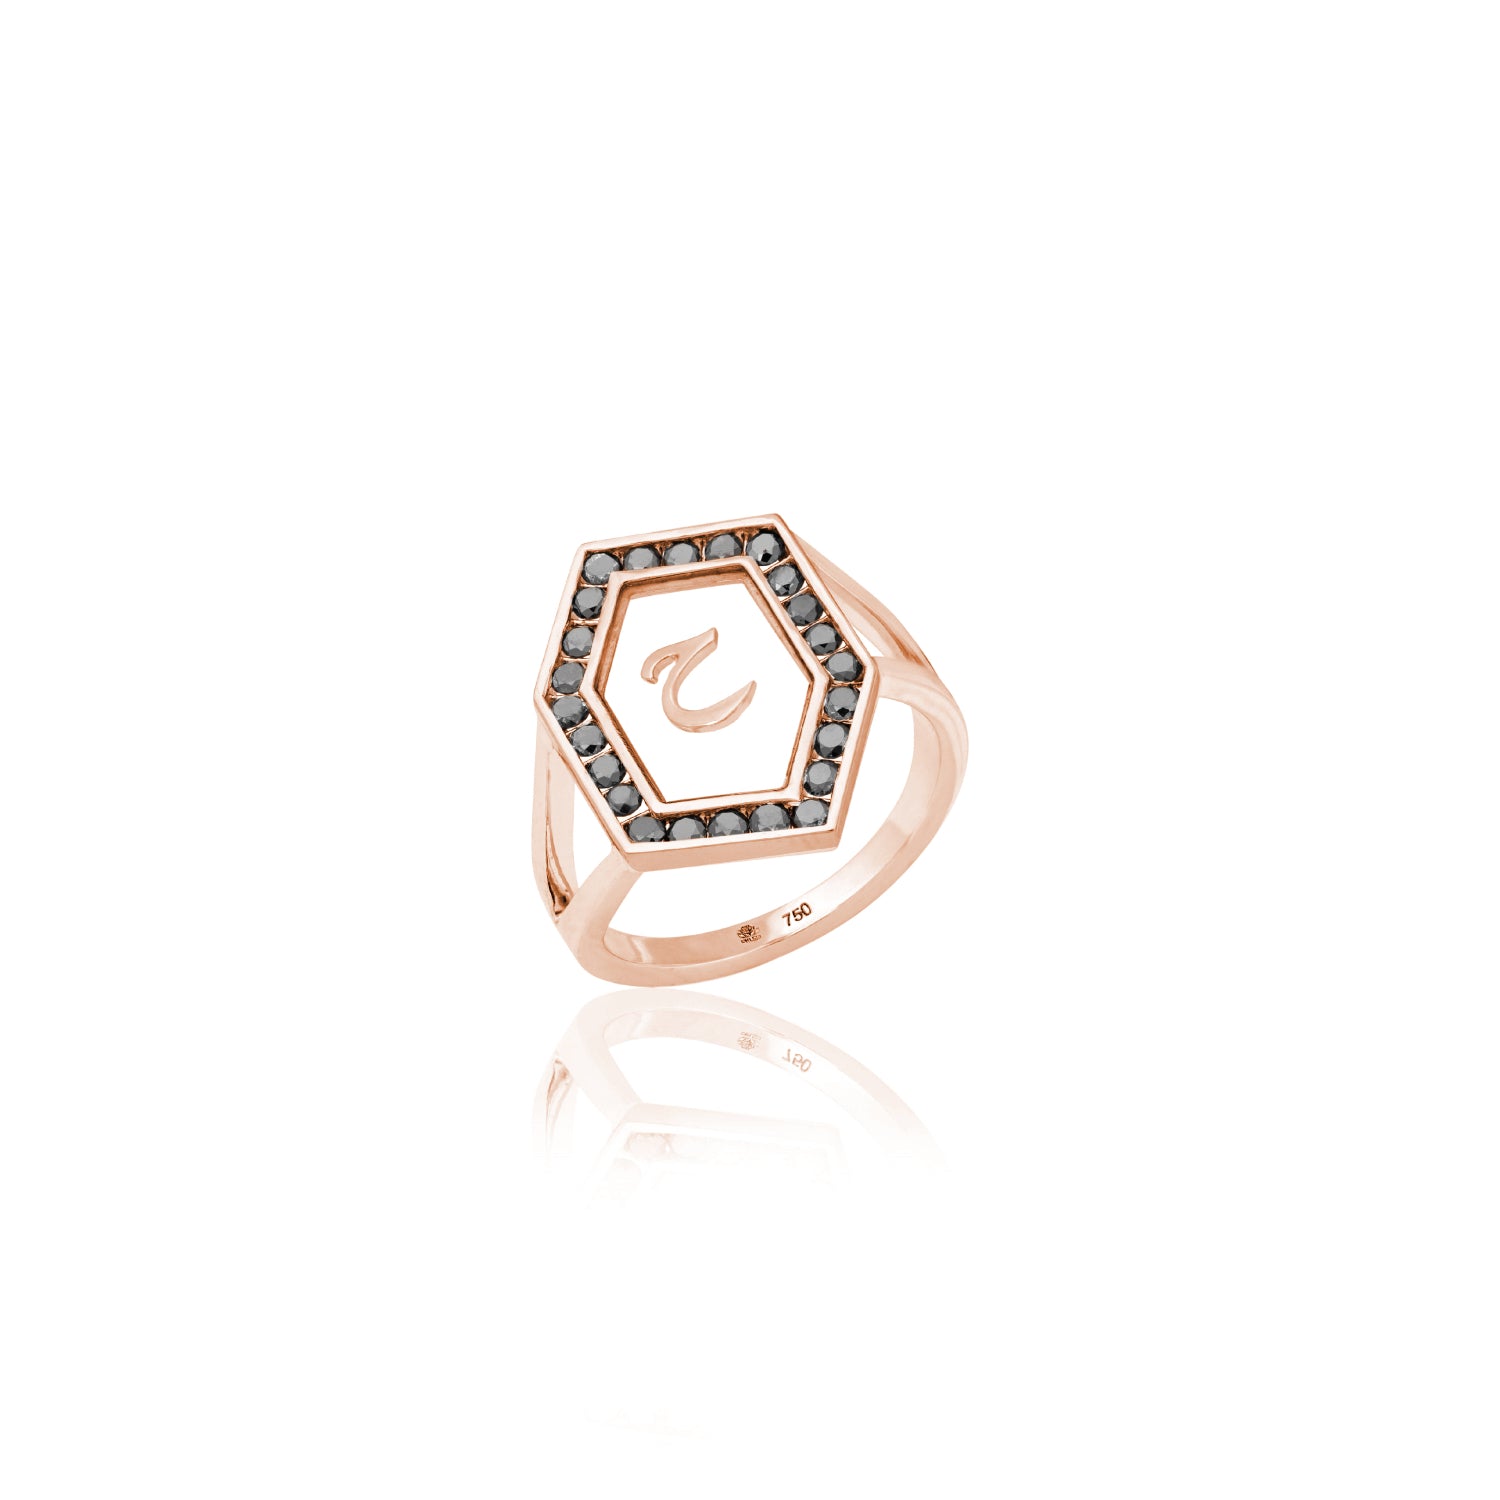 Qamoos 1.0 Letter ح Black Diamond Ring in Rose Gold